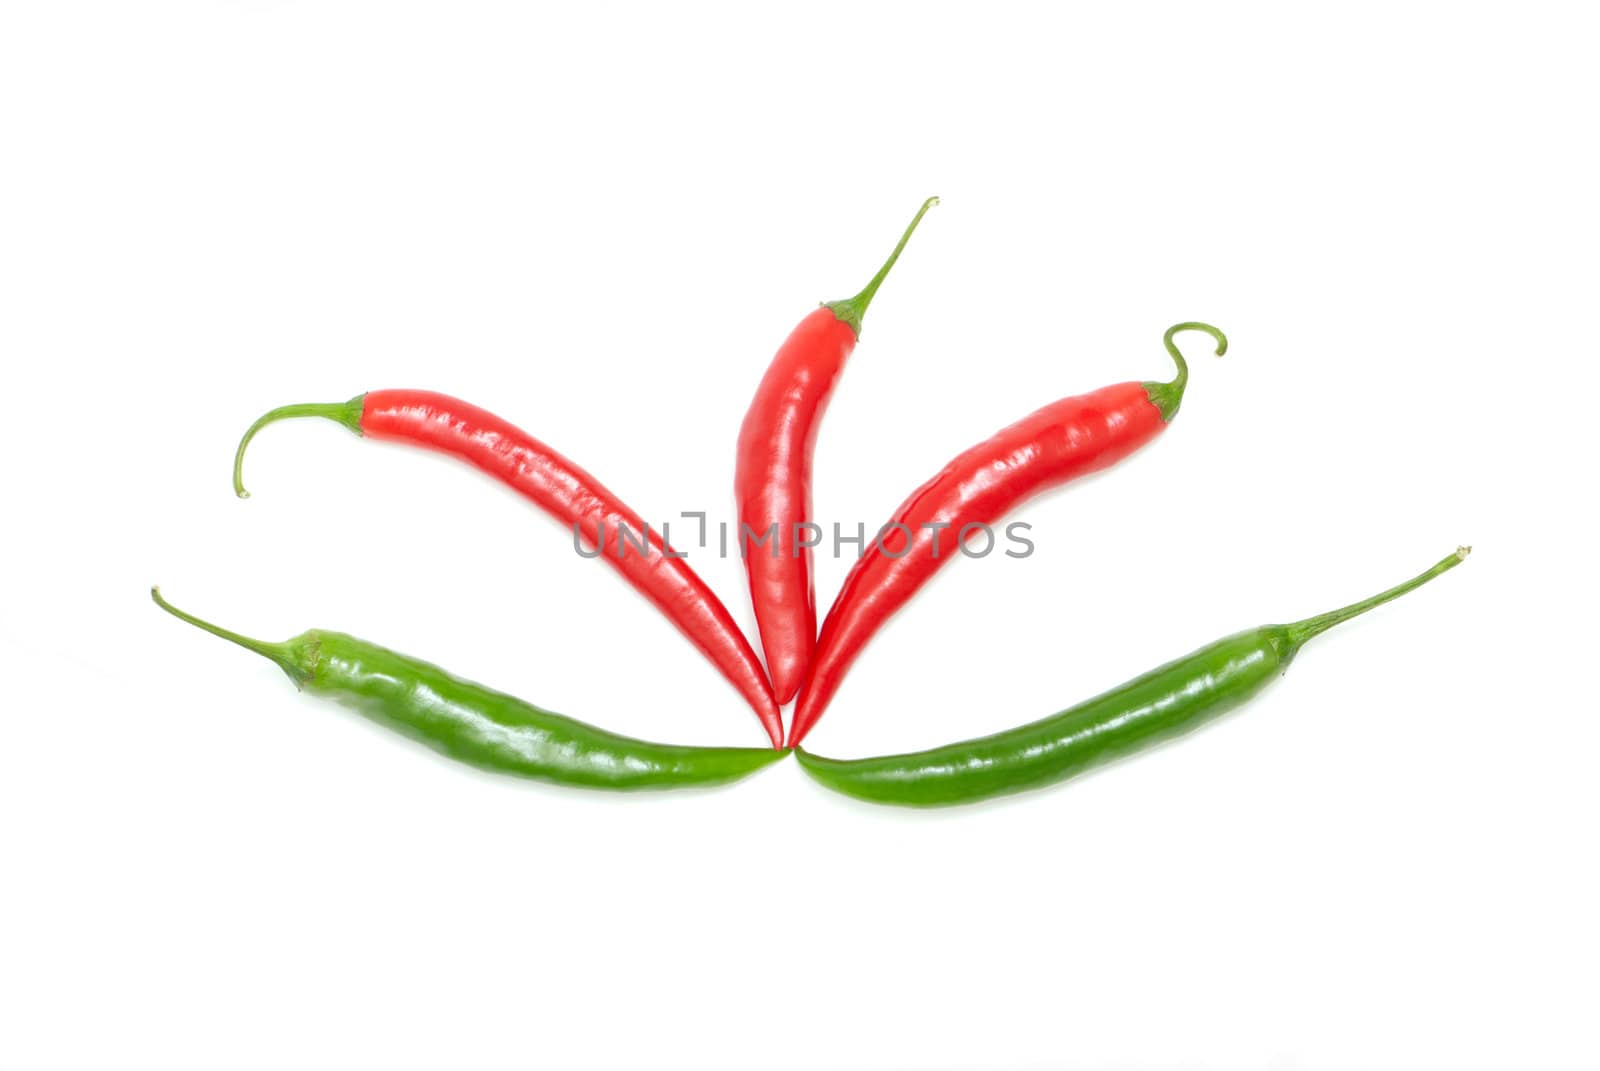 Chili peppers by Olinkau